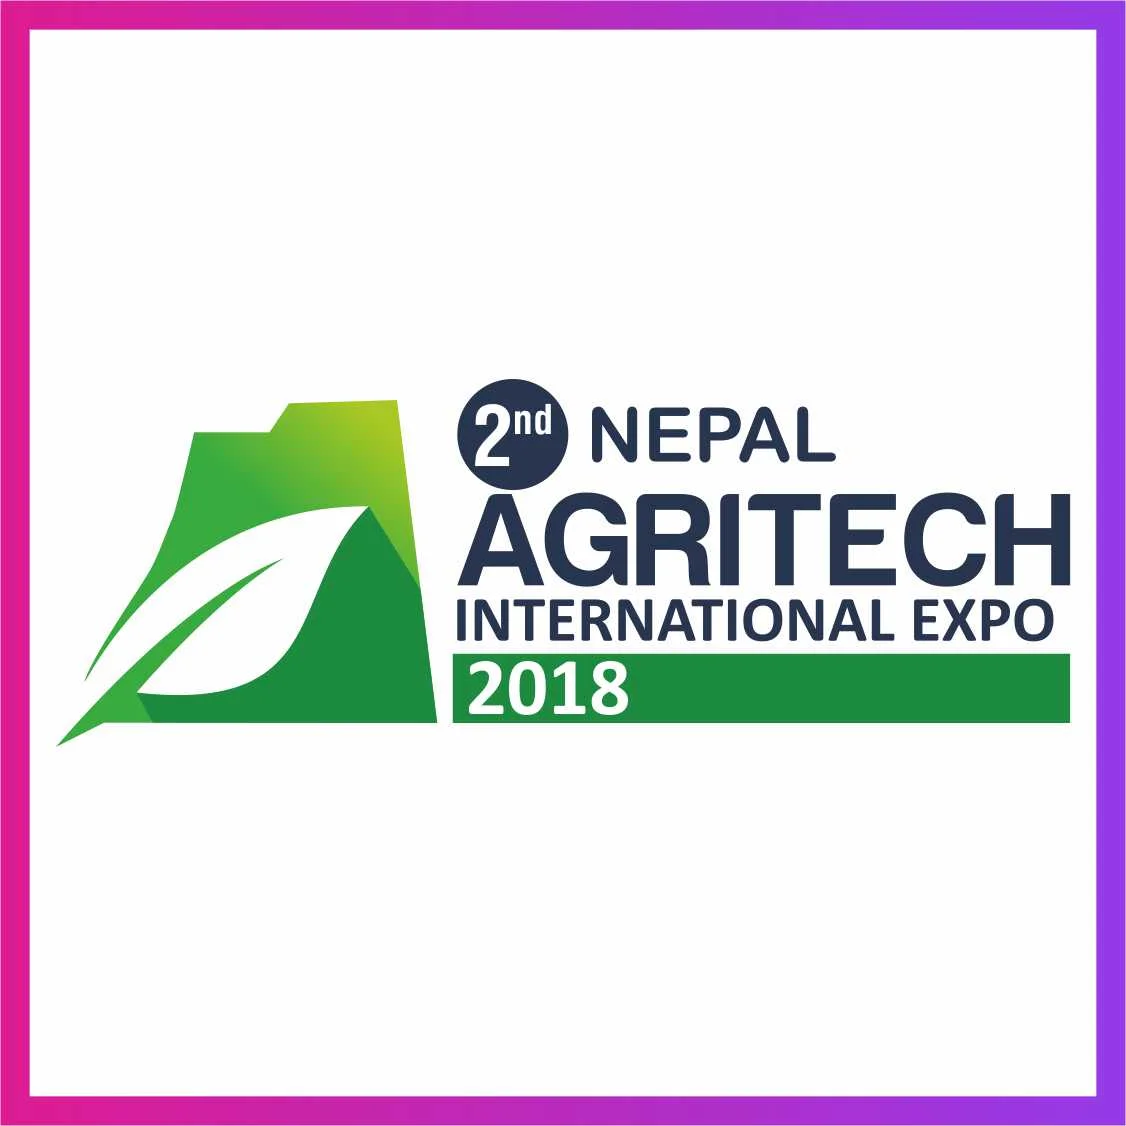 Nepal Agritech International Expo 2018